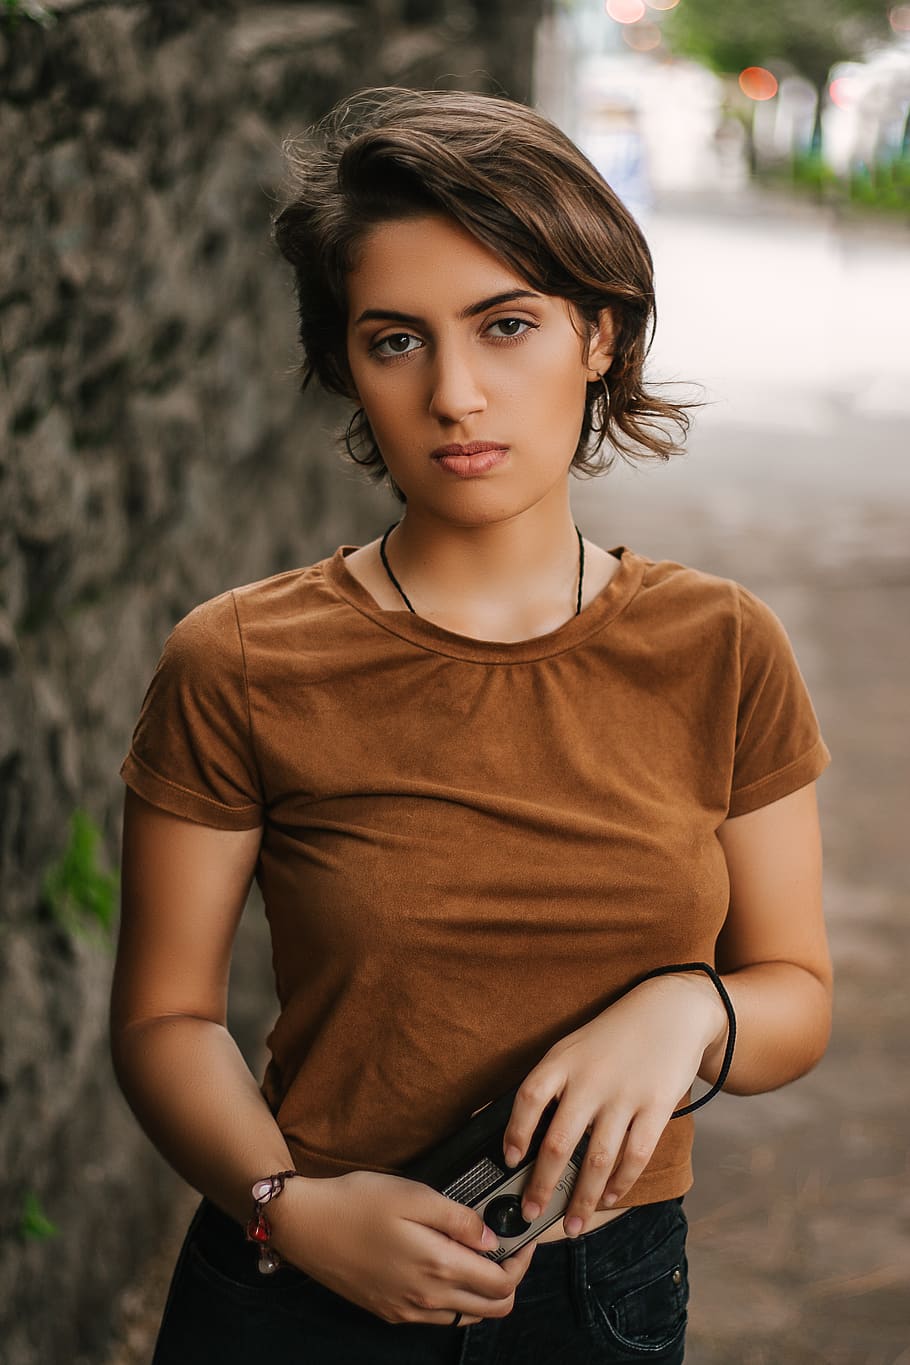 Hd Wallpaper Photo Of Girl Wearing Brown Shirt Attractive Beautiful